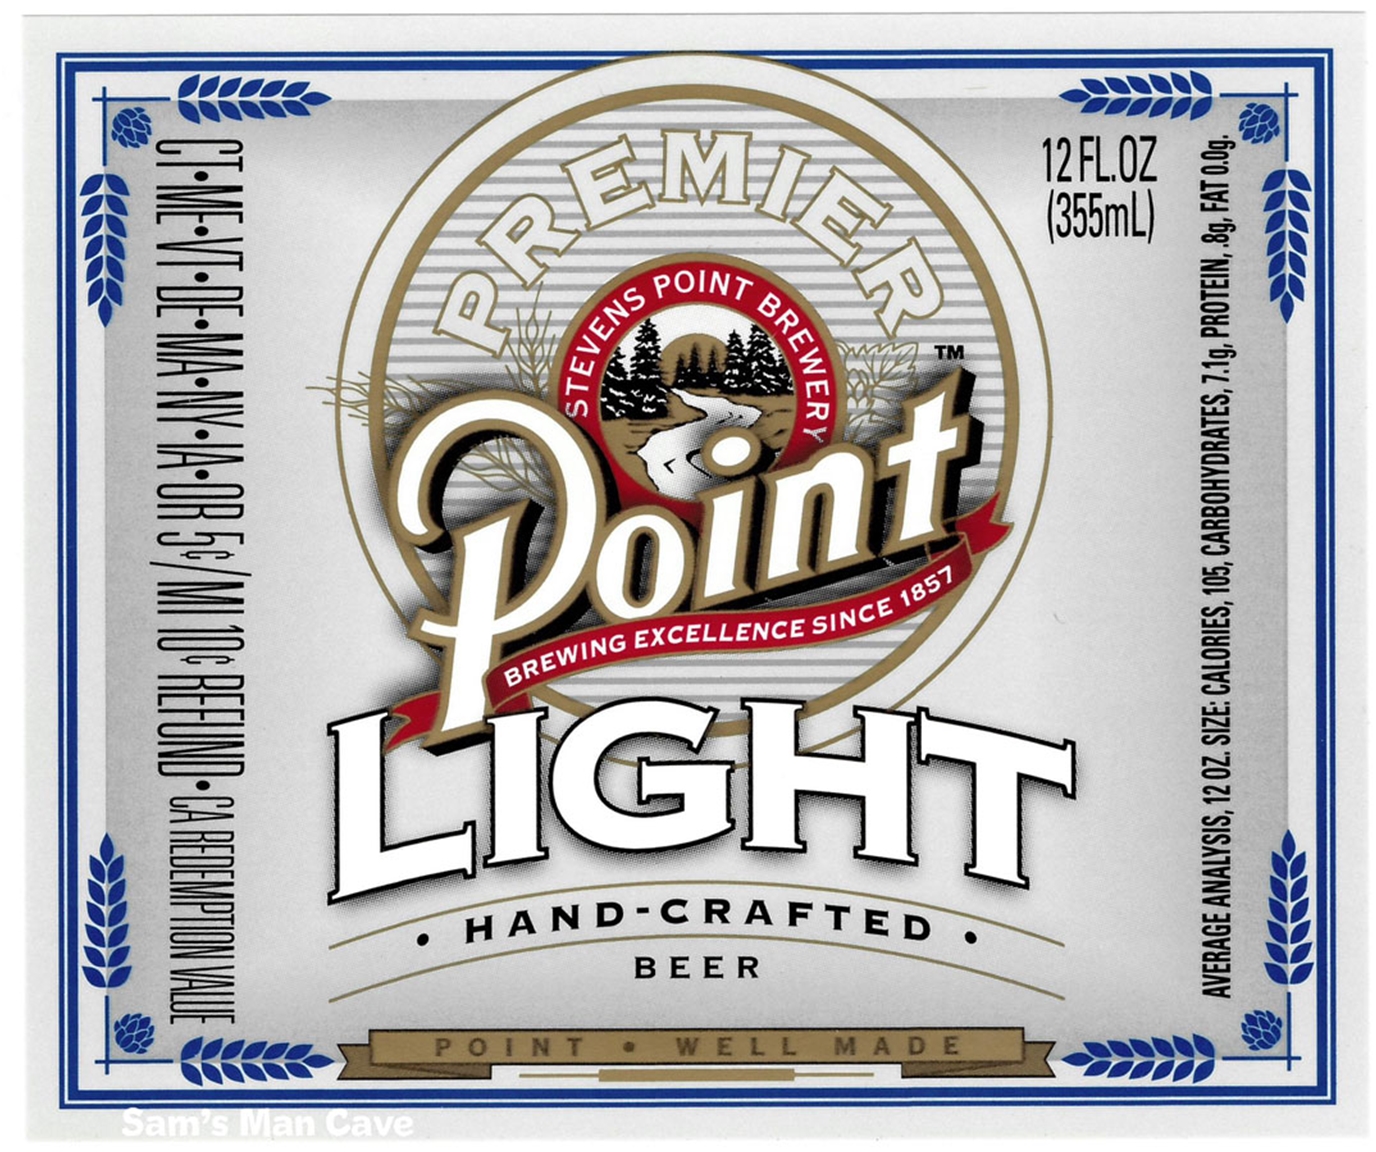 Point Light Beer Label